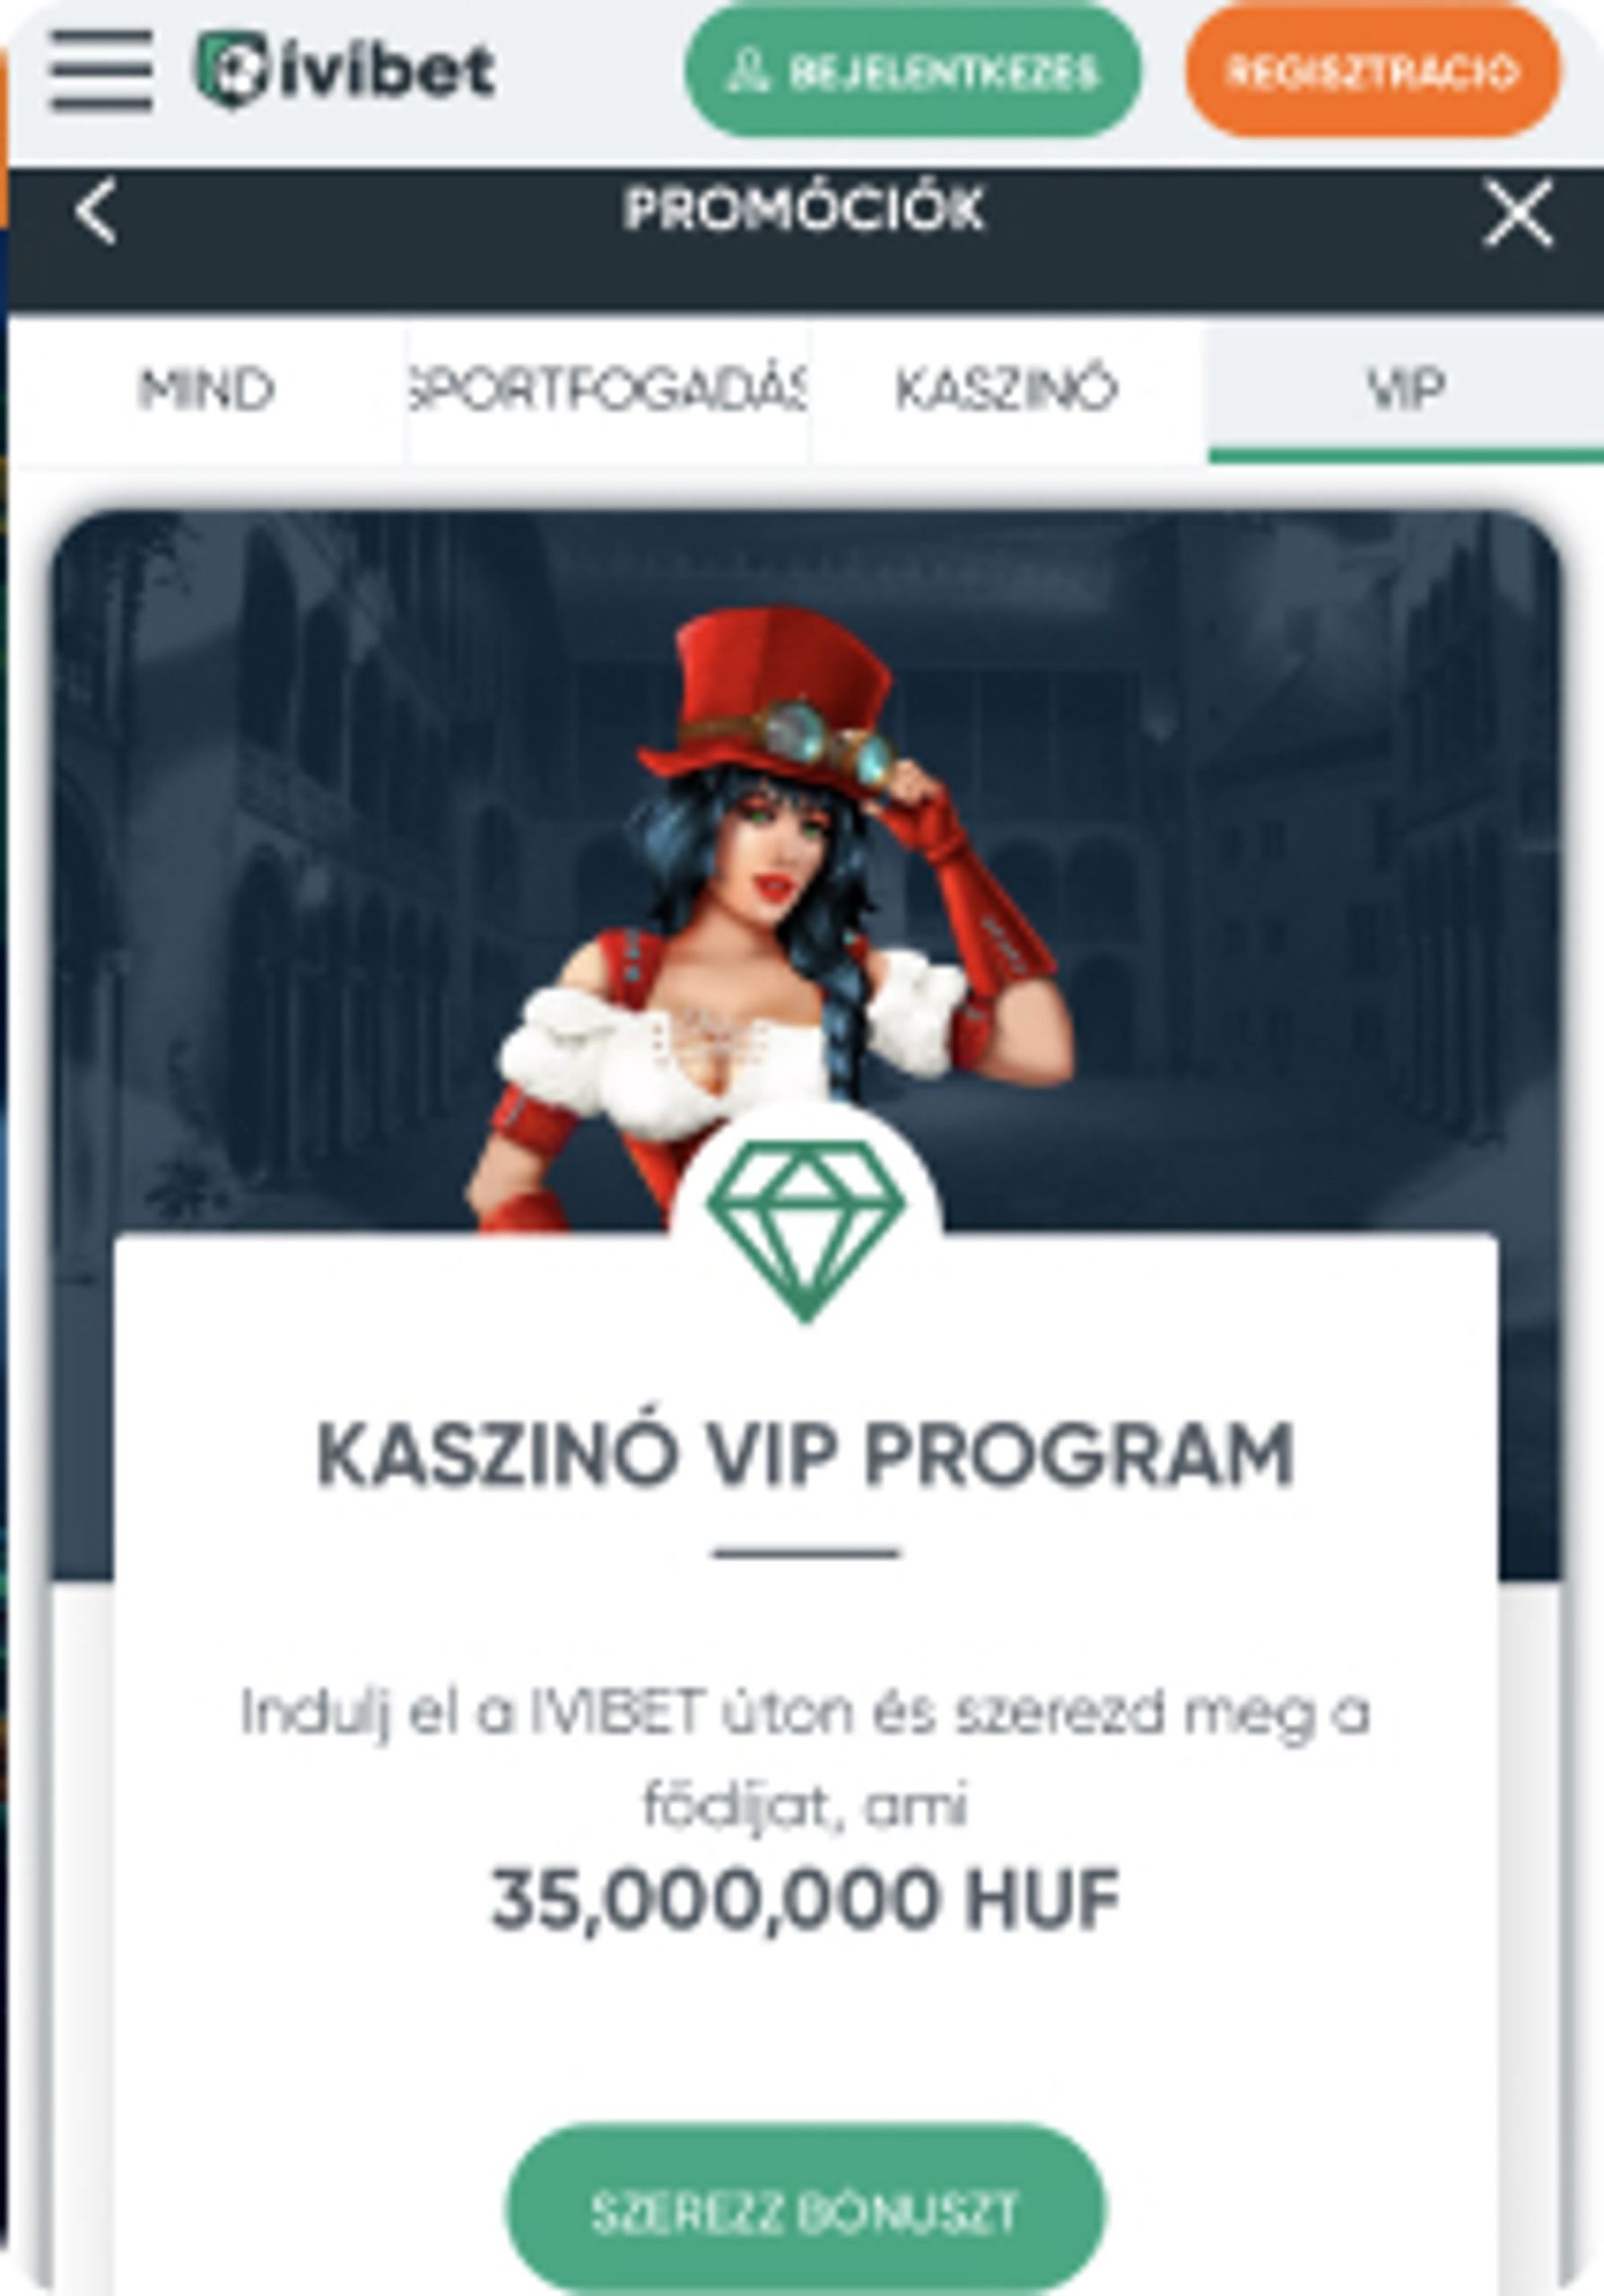 ivibet casino mobile screenshot - vip program